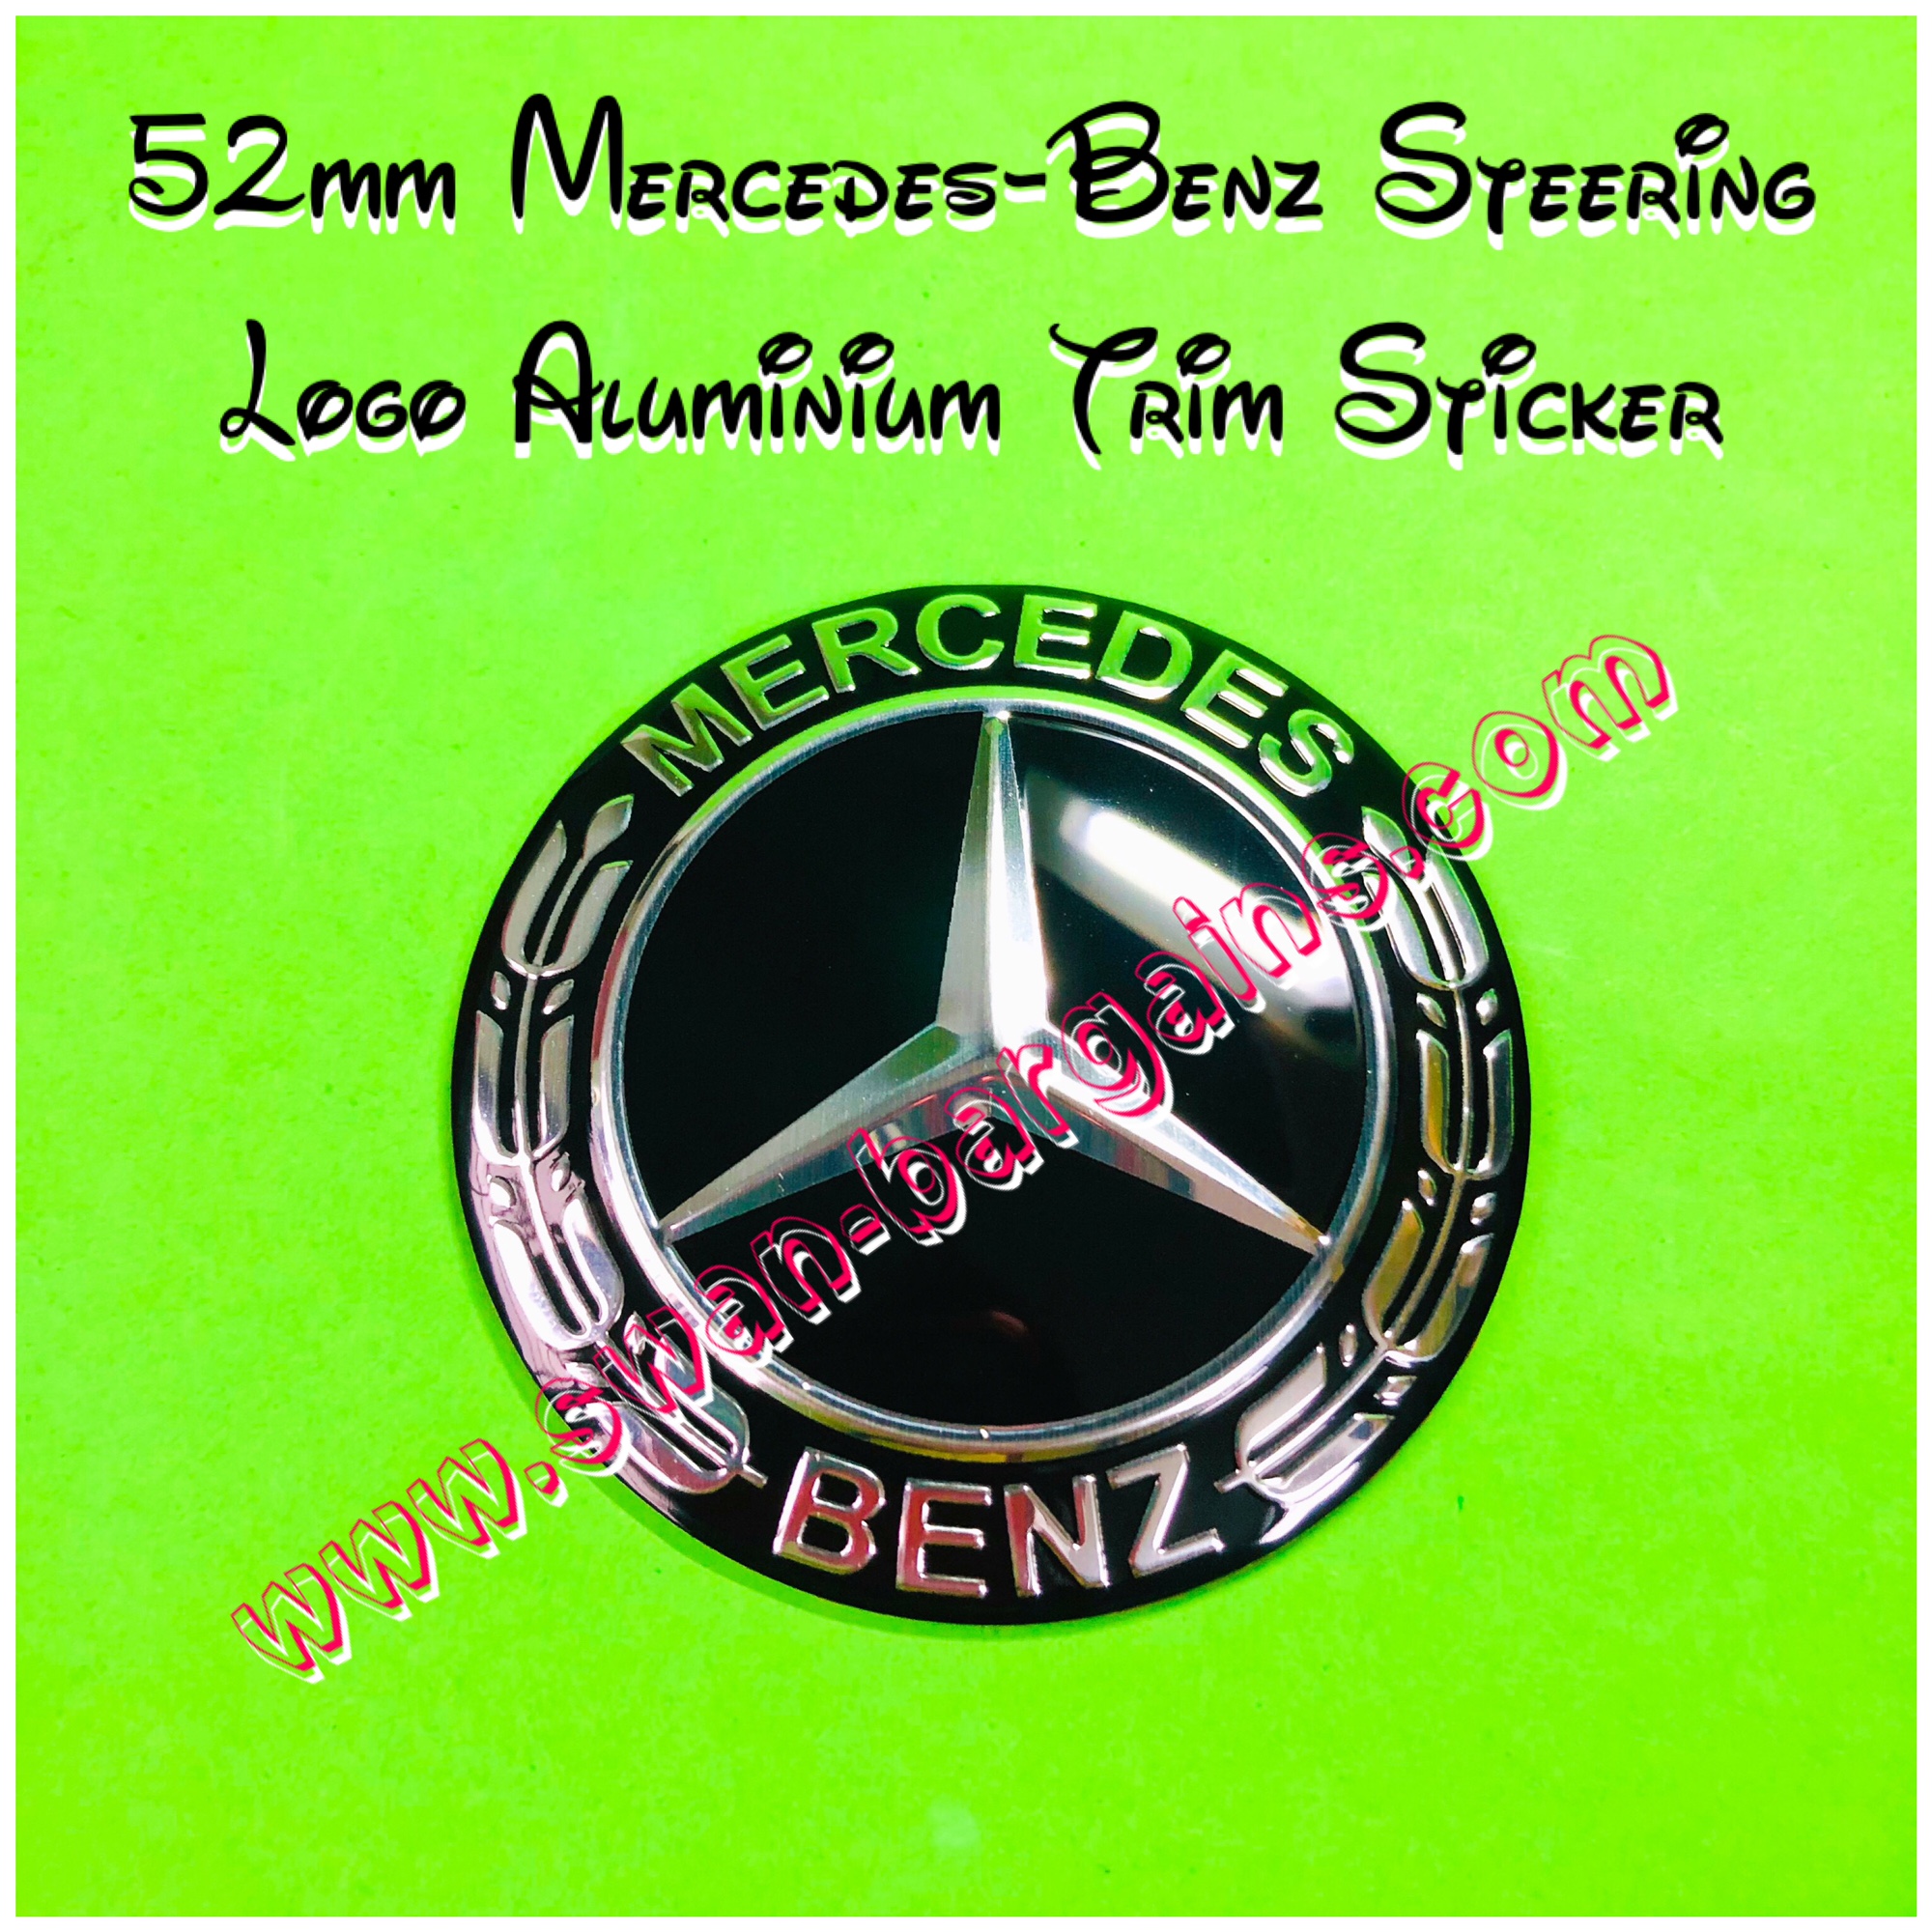 Mercedes Benz Steering Wheel Star Overlay Emblem Singapore - 52mm Glossy Black